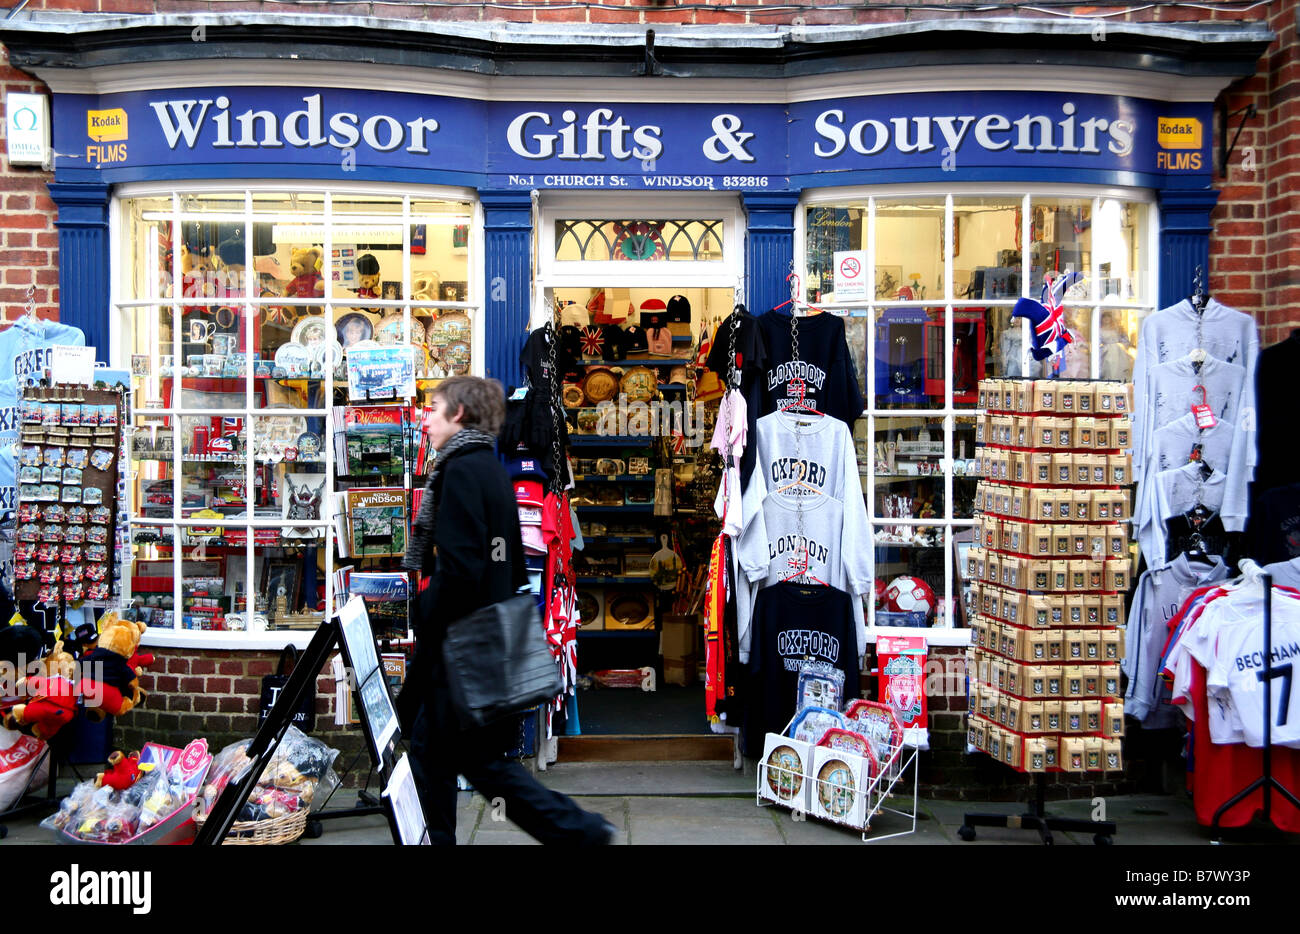 Windsor gifts souvenir shop -Fotos und -Bildmaterial in hoher Auflösung –  Alamy